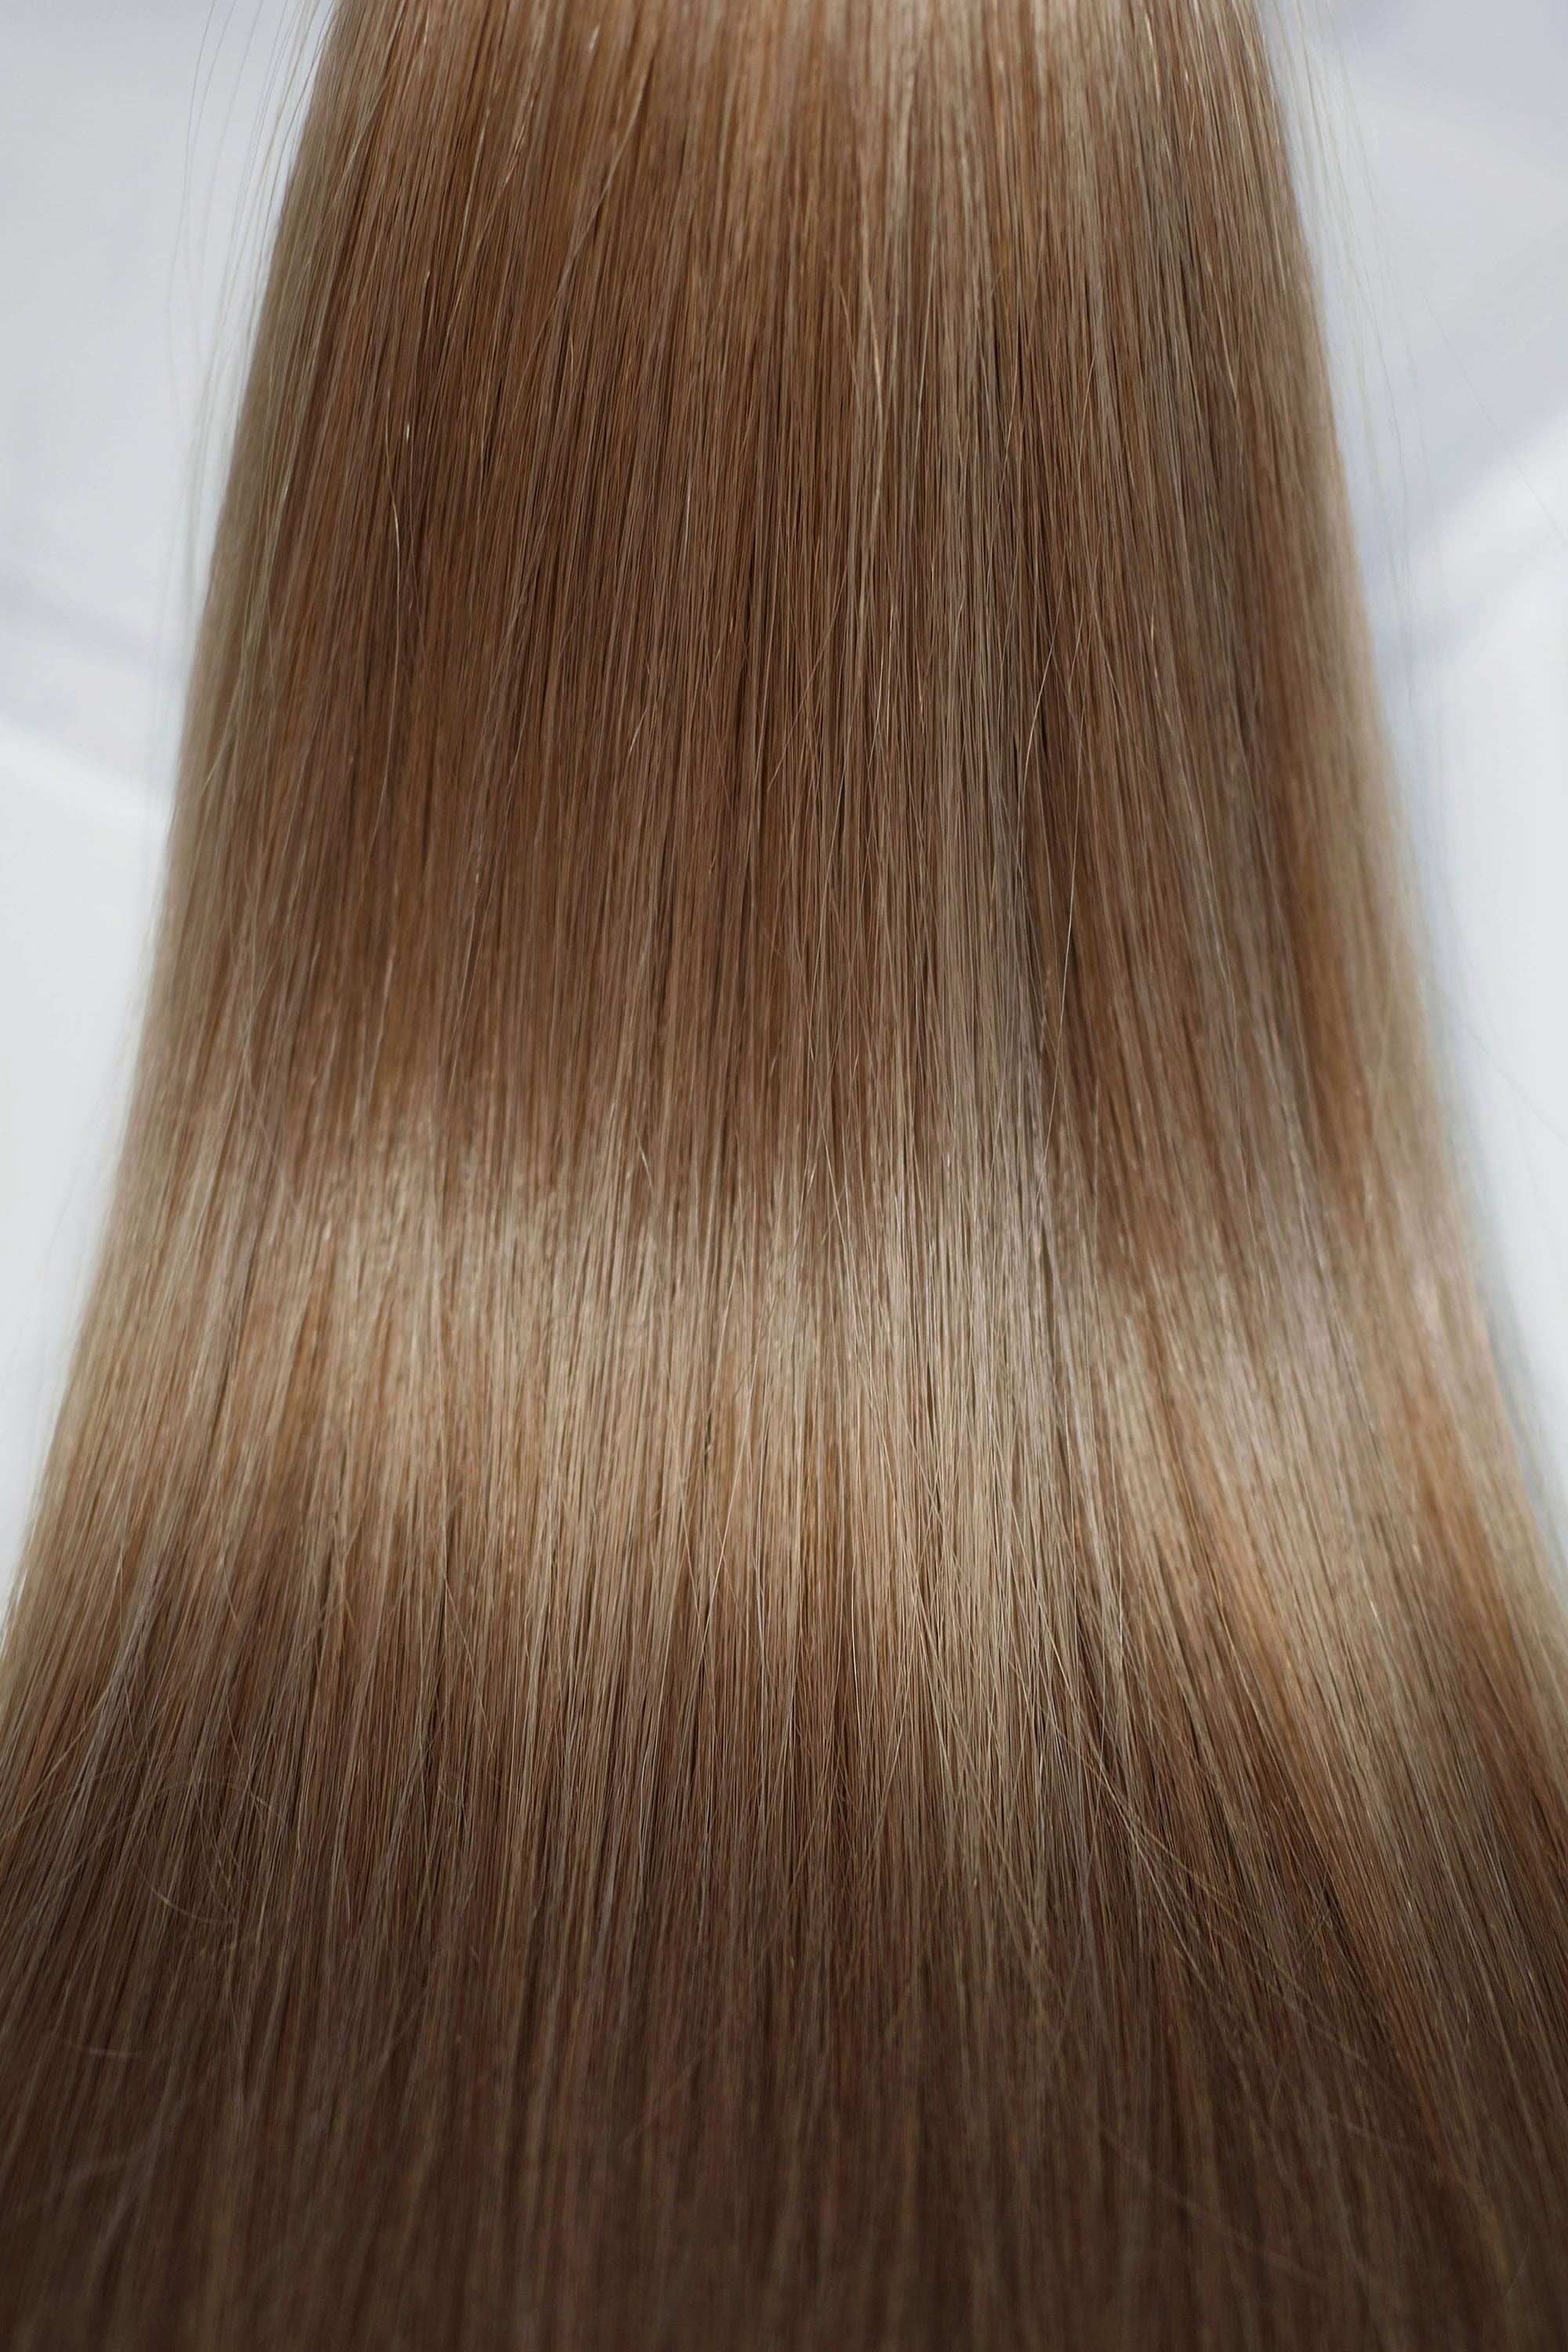 Behair professional Keratin Tip "Premium" 18" (45cm) Natural Straight  Light Ash Brown #10 - 25g (1g each pcs) hair extensions